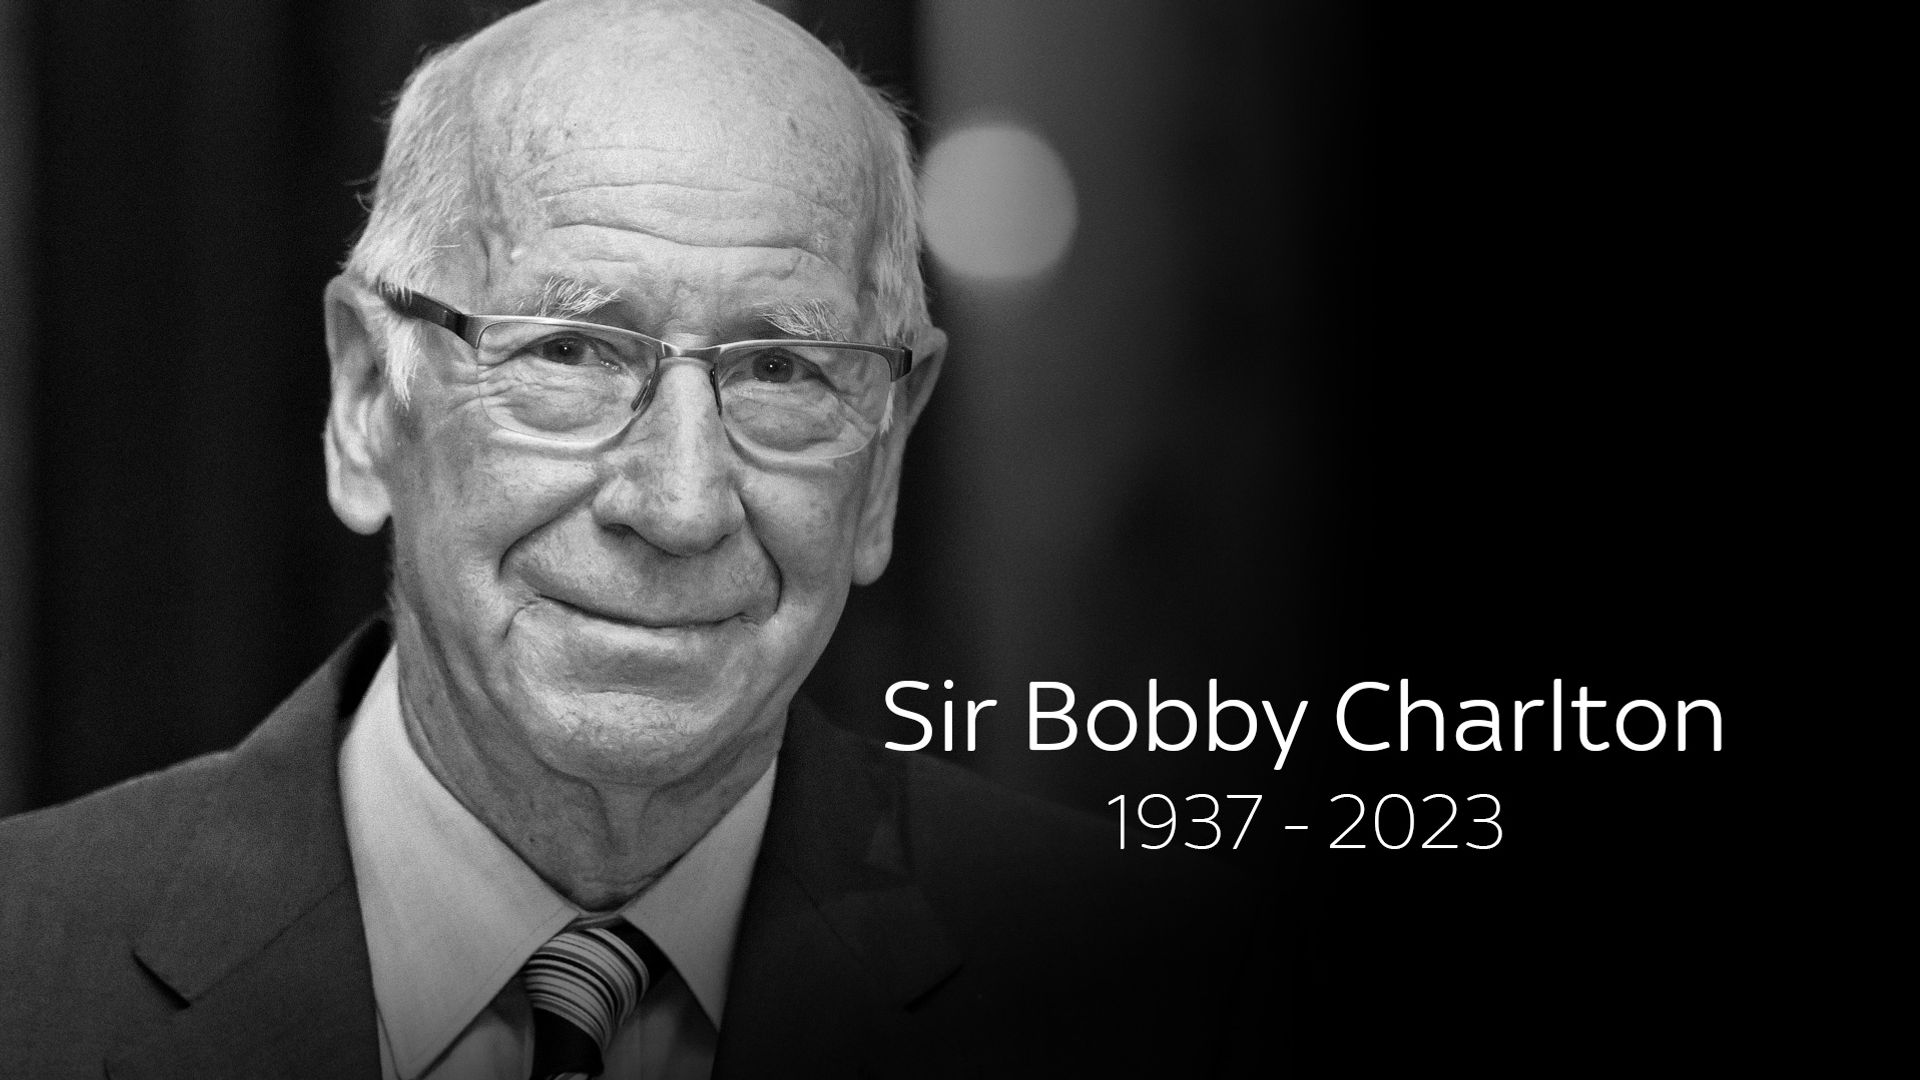 Man Utd and England legend Sir Bobby Charlton dies